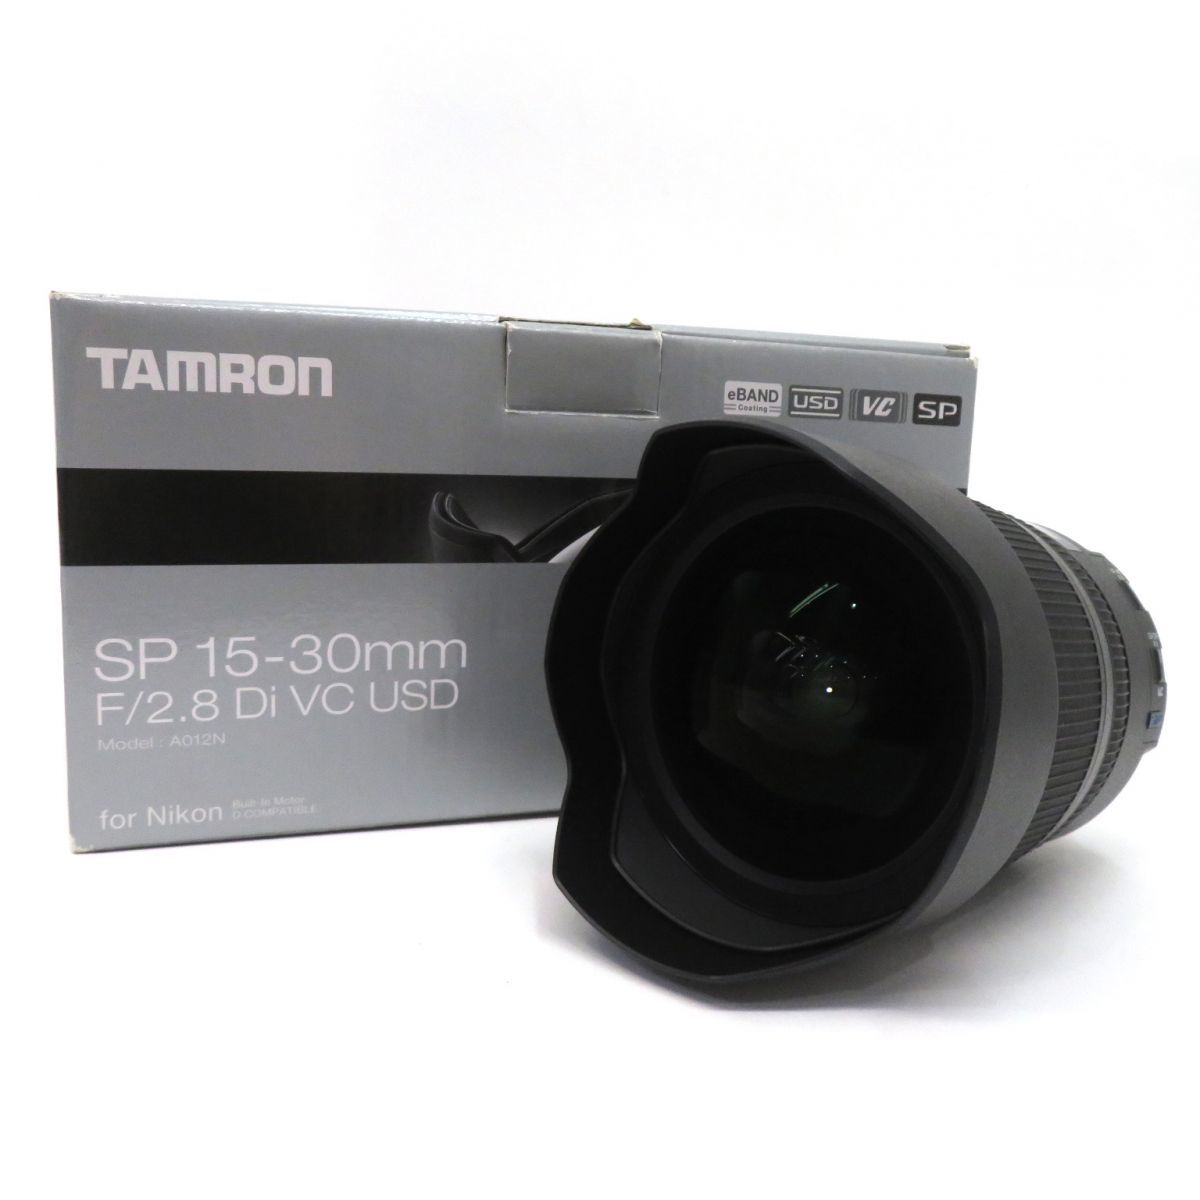 105s TAMRON タムロン SP 15-30mm F/2.8 Di VC USD (Model A012) Nikon用 ※